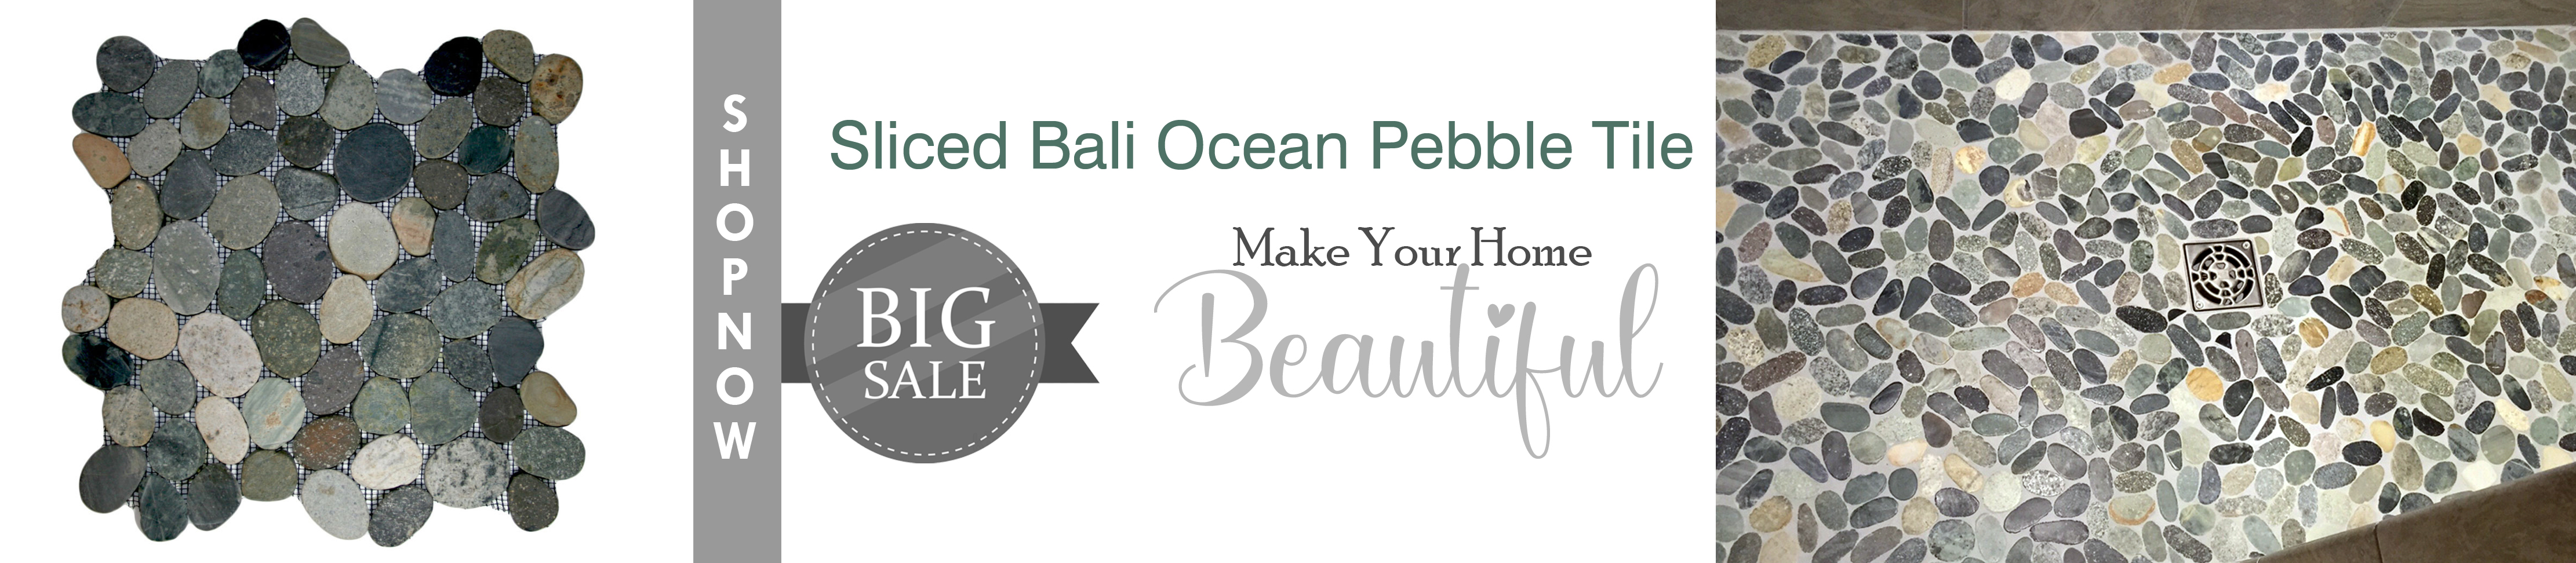 Sliced Bali Ocean Pebble Tile